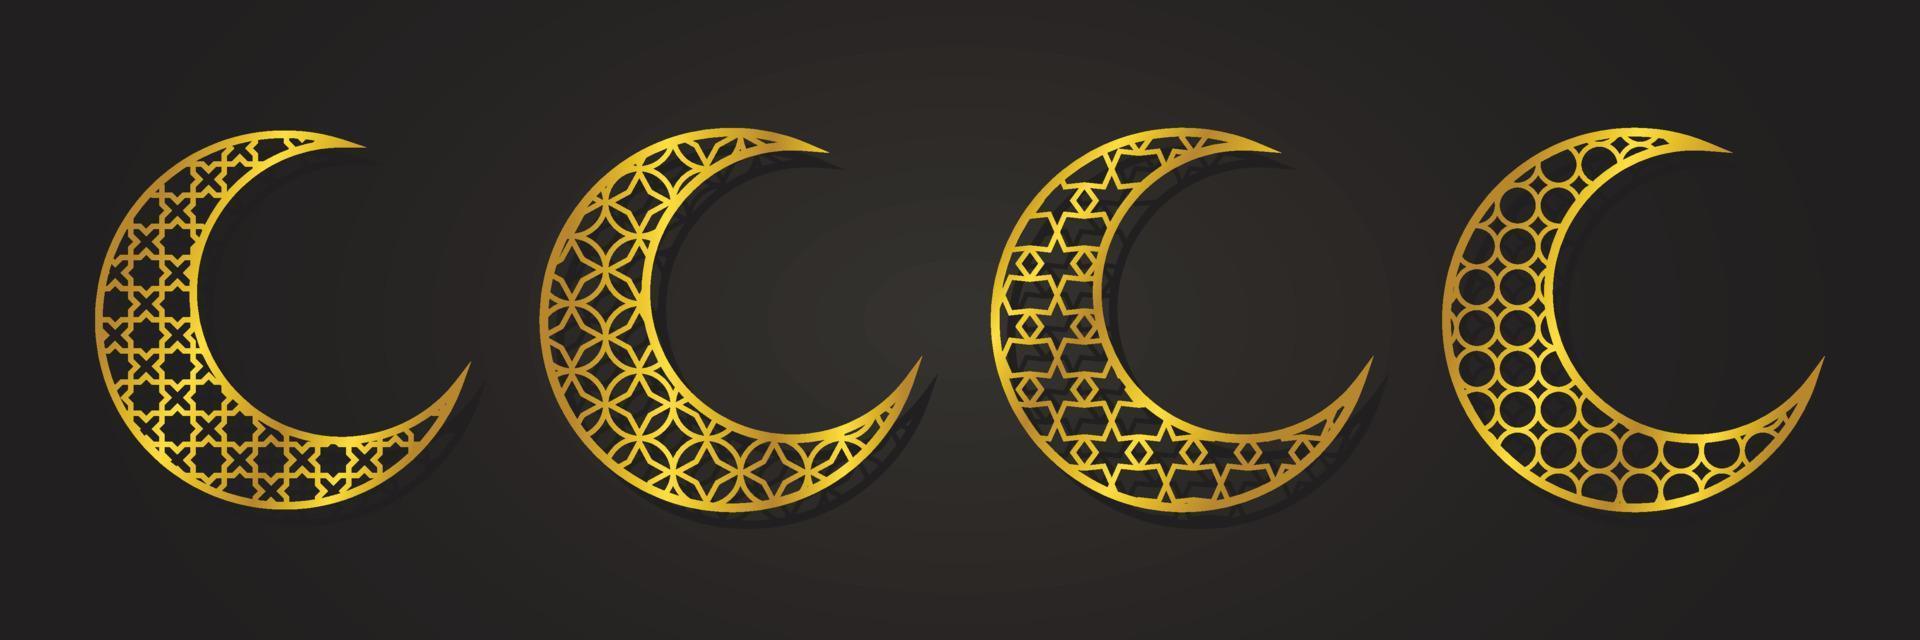 islamisk måne prydnad gyllene lyx, arabesk mönster, set samling design vektor